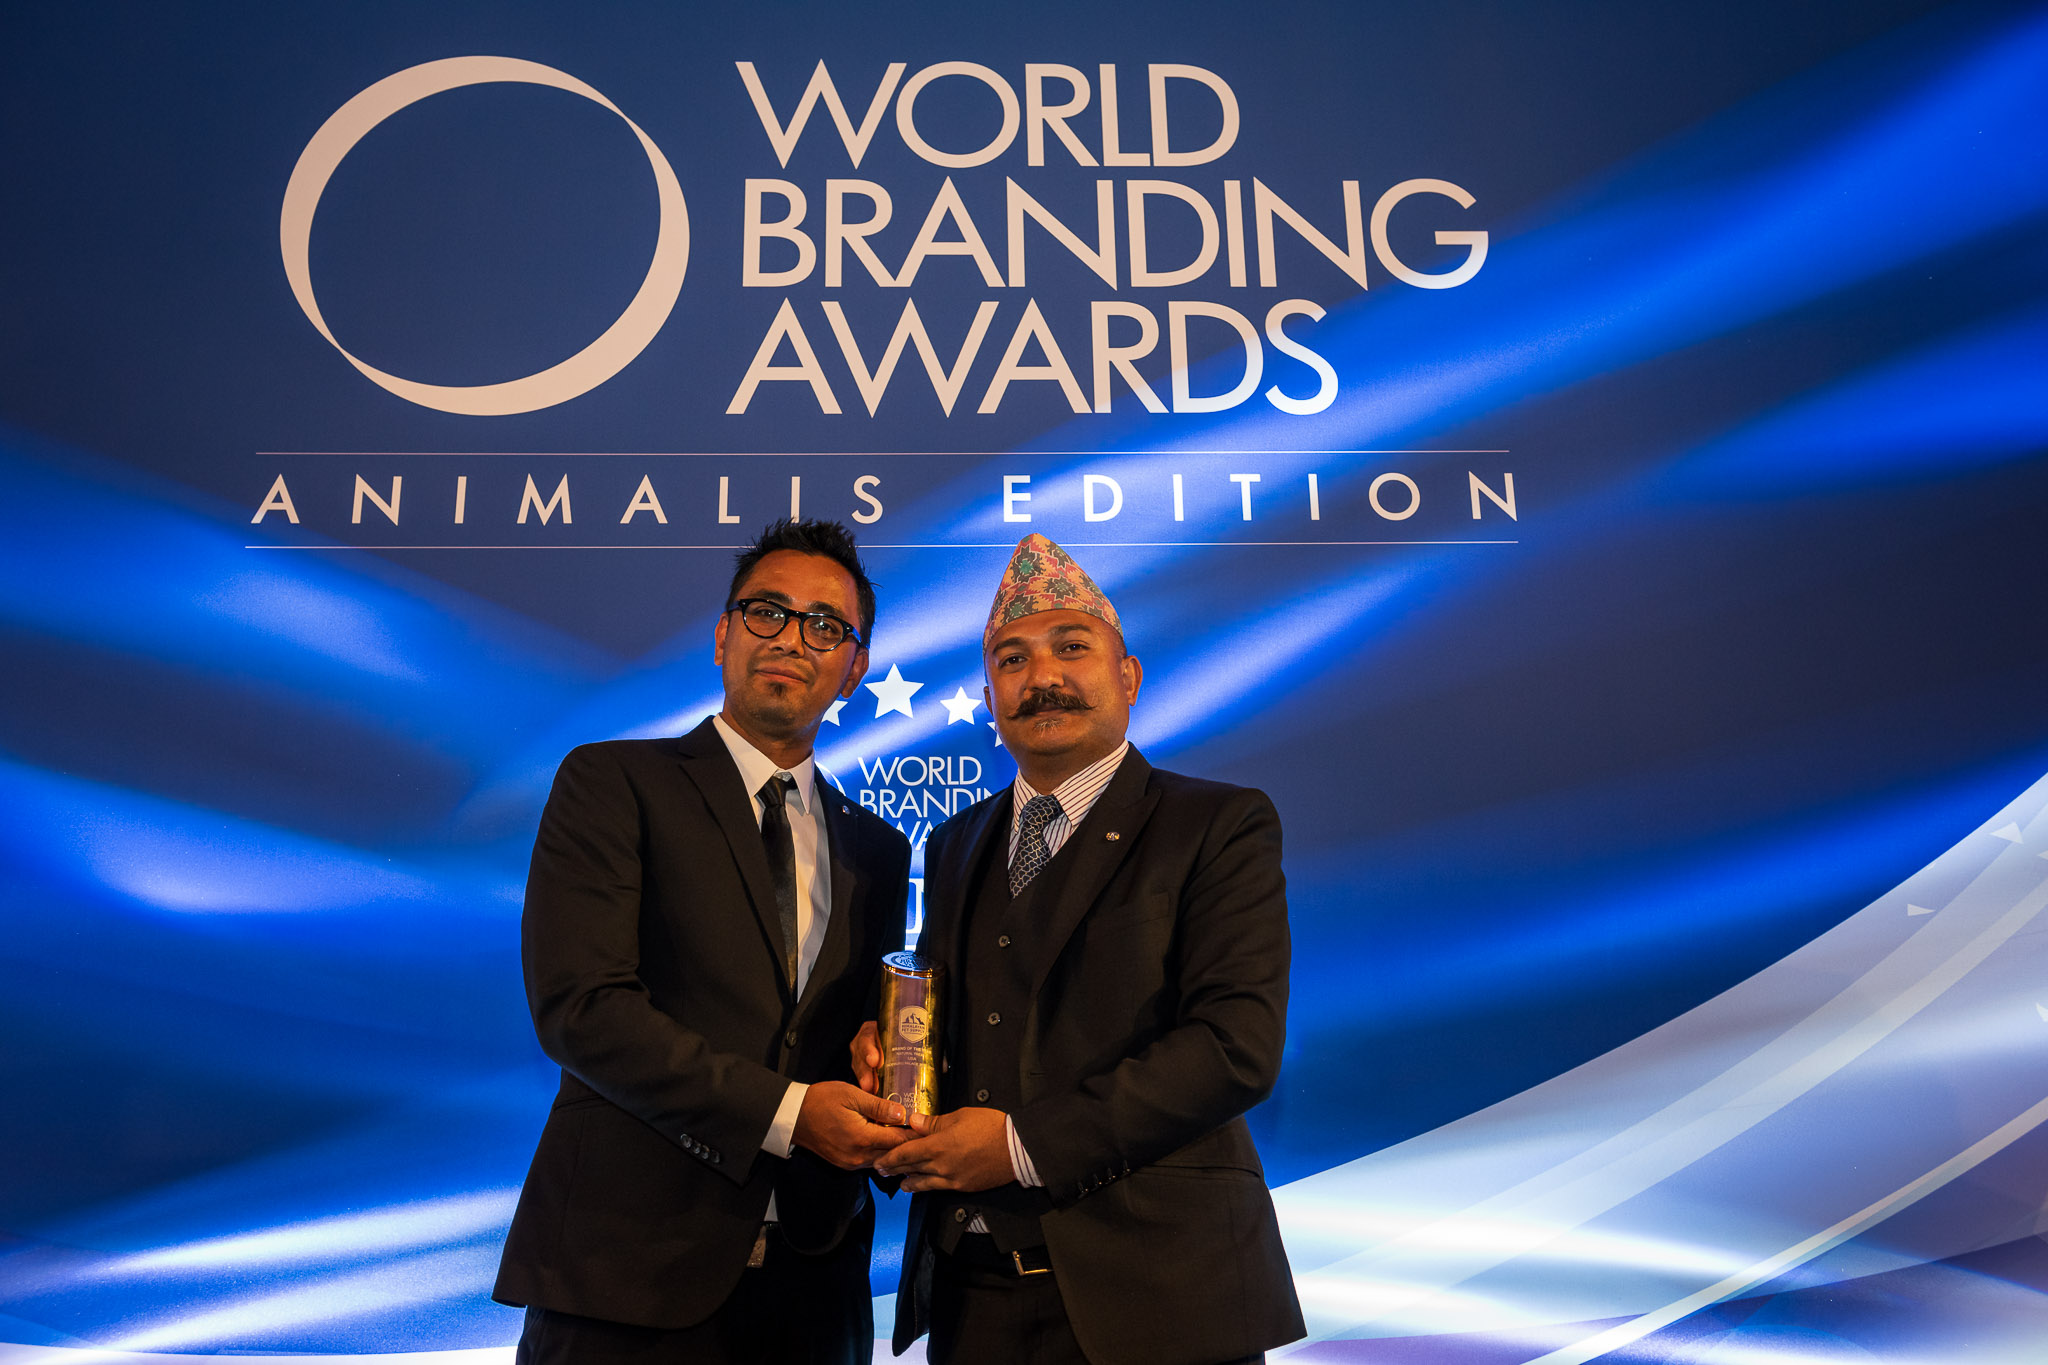 20190703_224729_world_branding_awards_animalis_8014